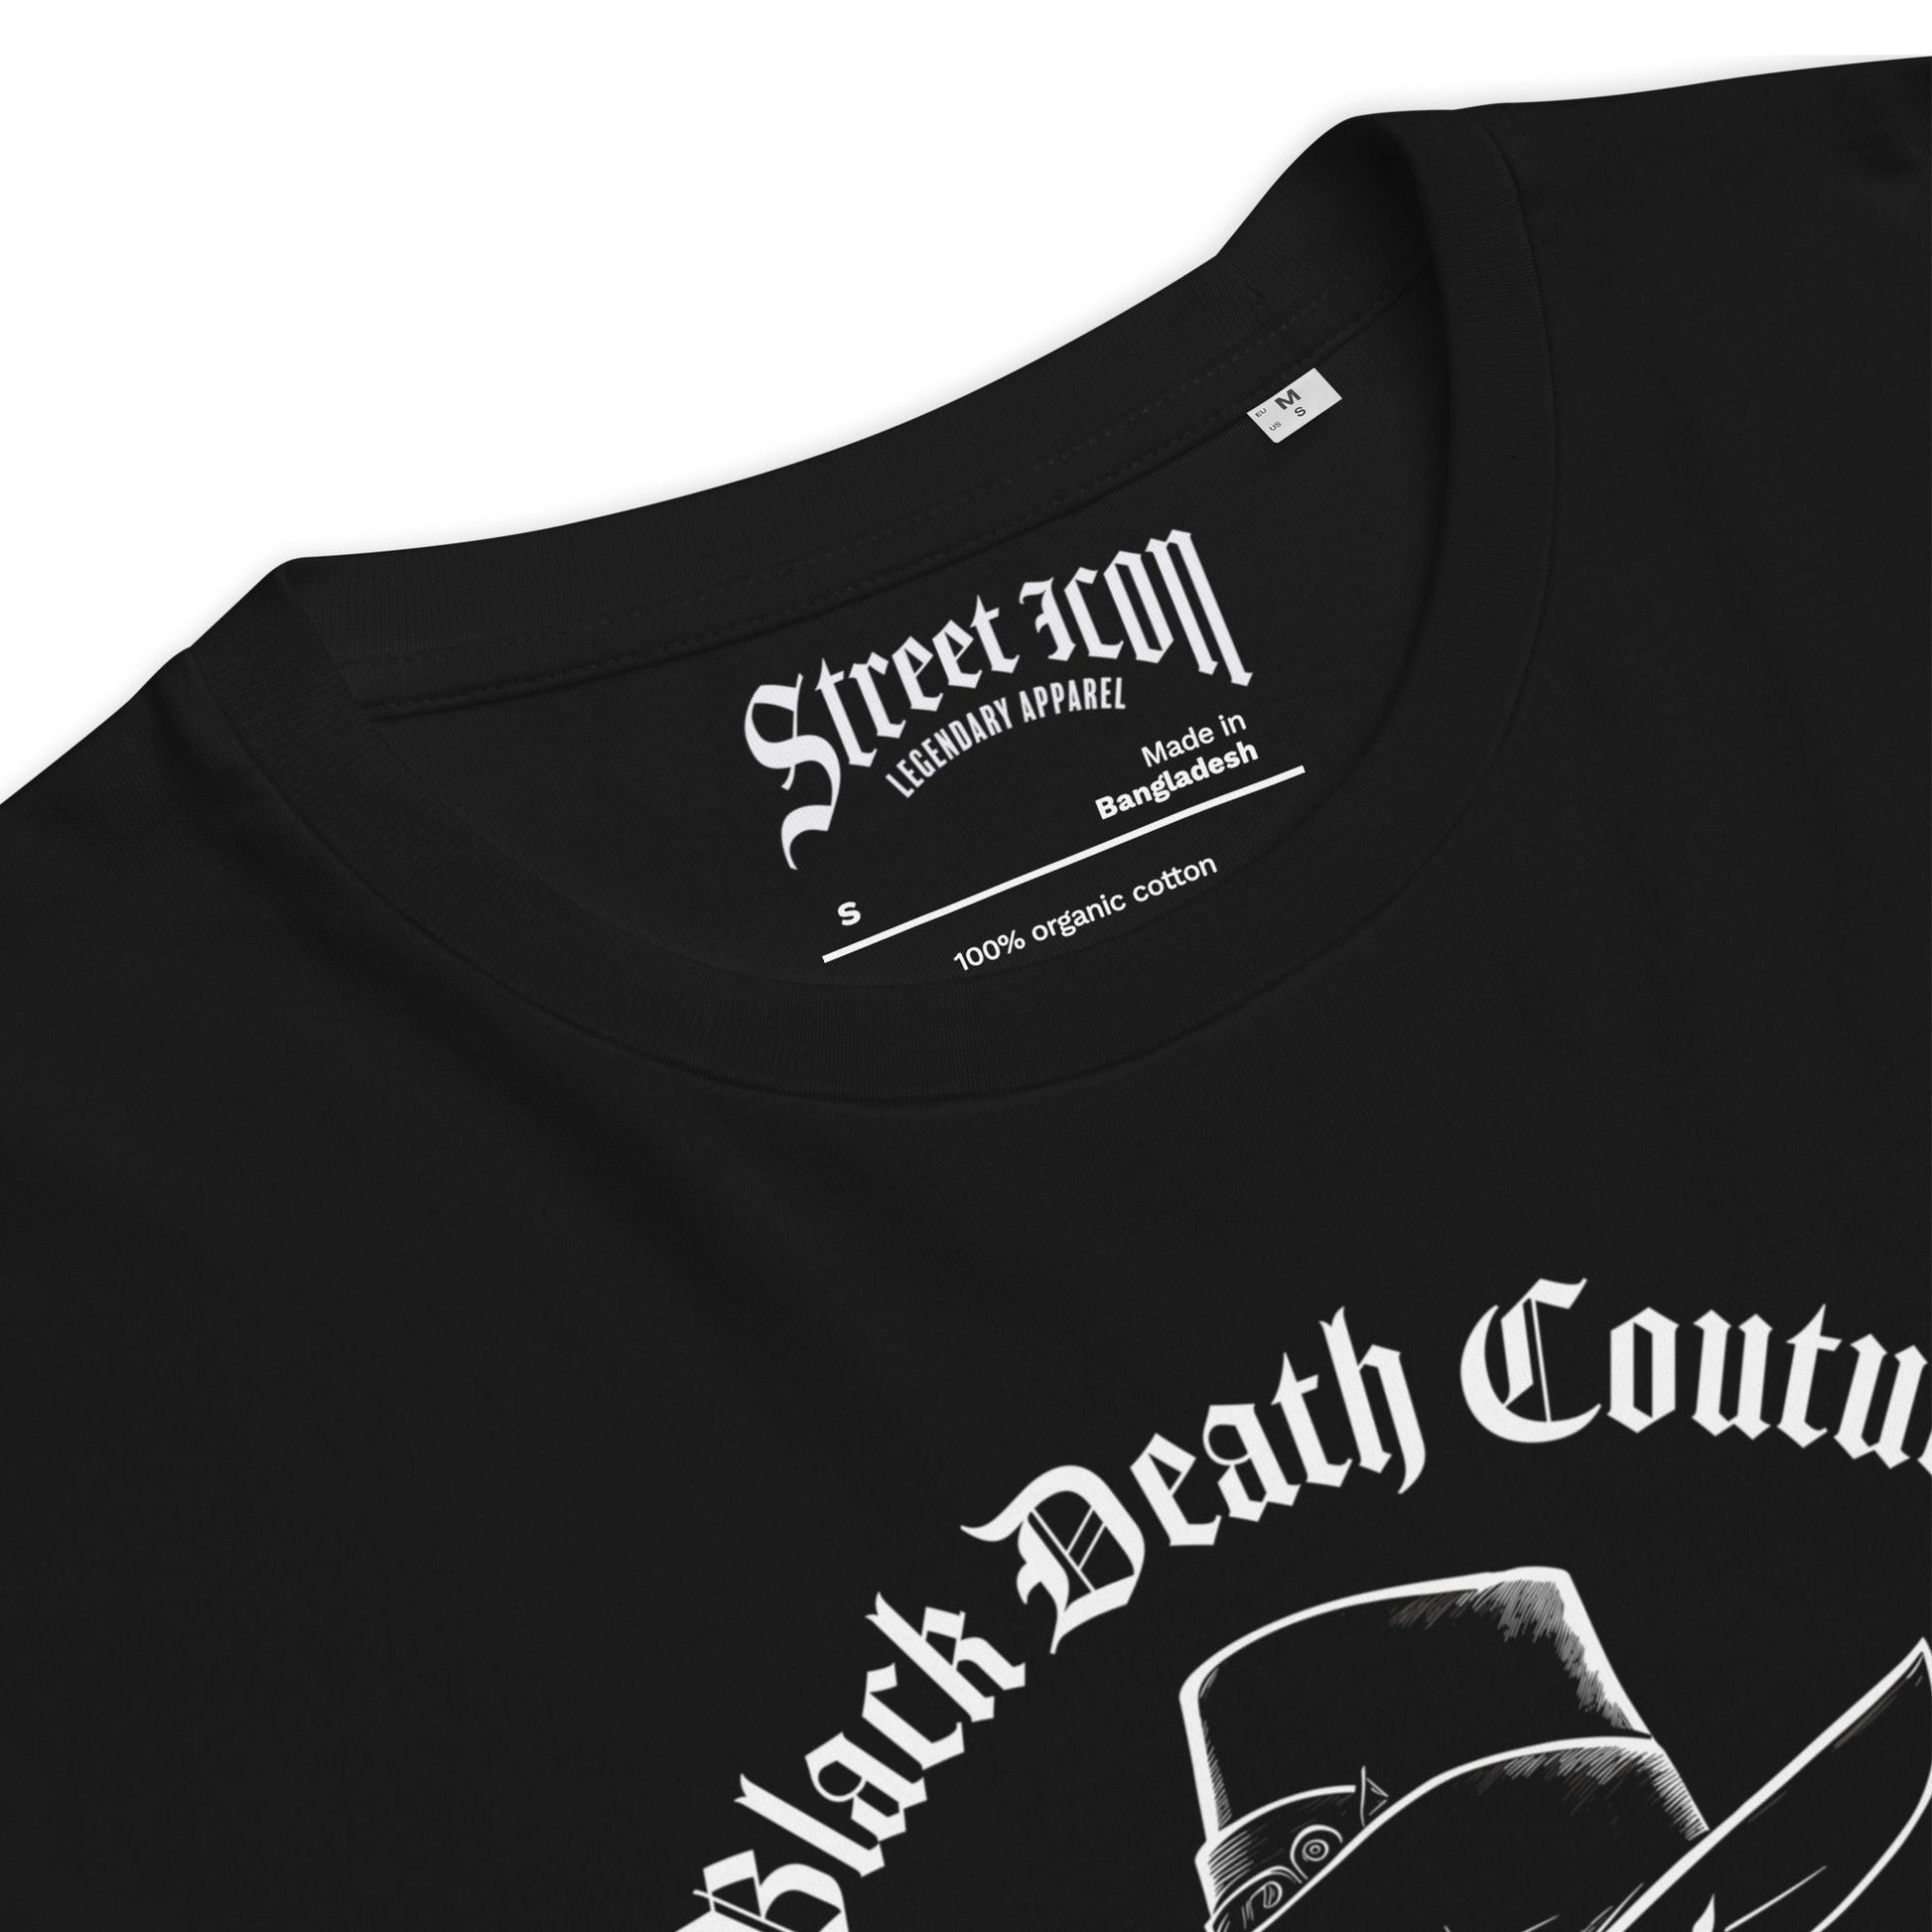 Black Death Couture - Premium T-Shirt - Street Icon